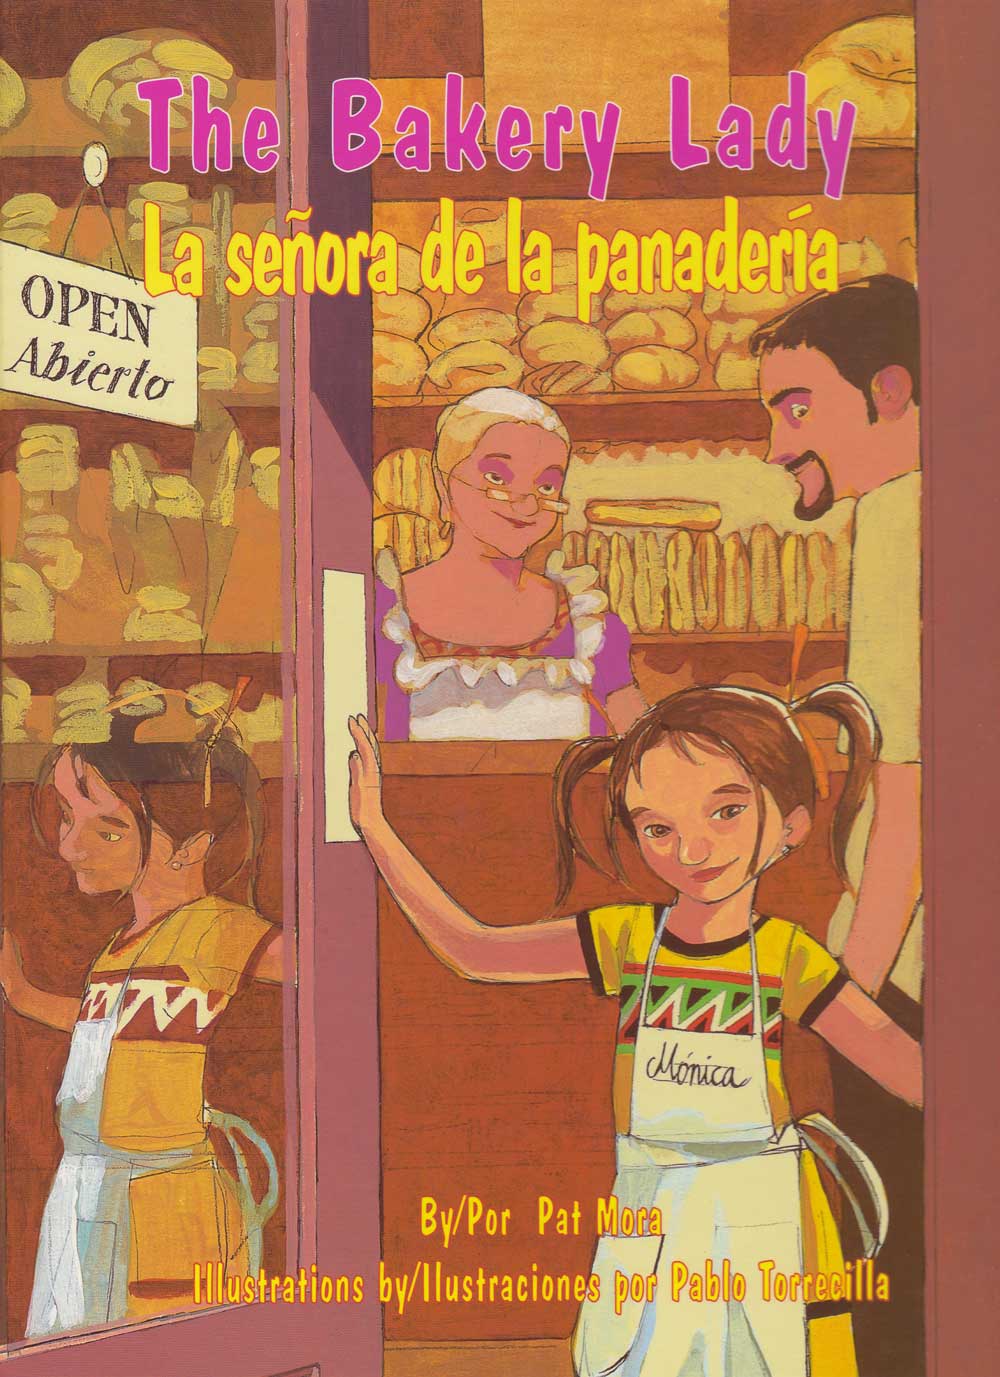 La senora de la panaderia - The Bakery Lady, Del Sol Books